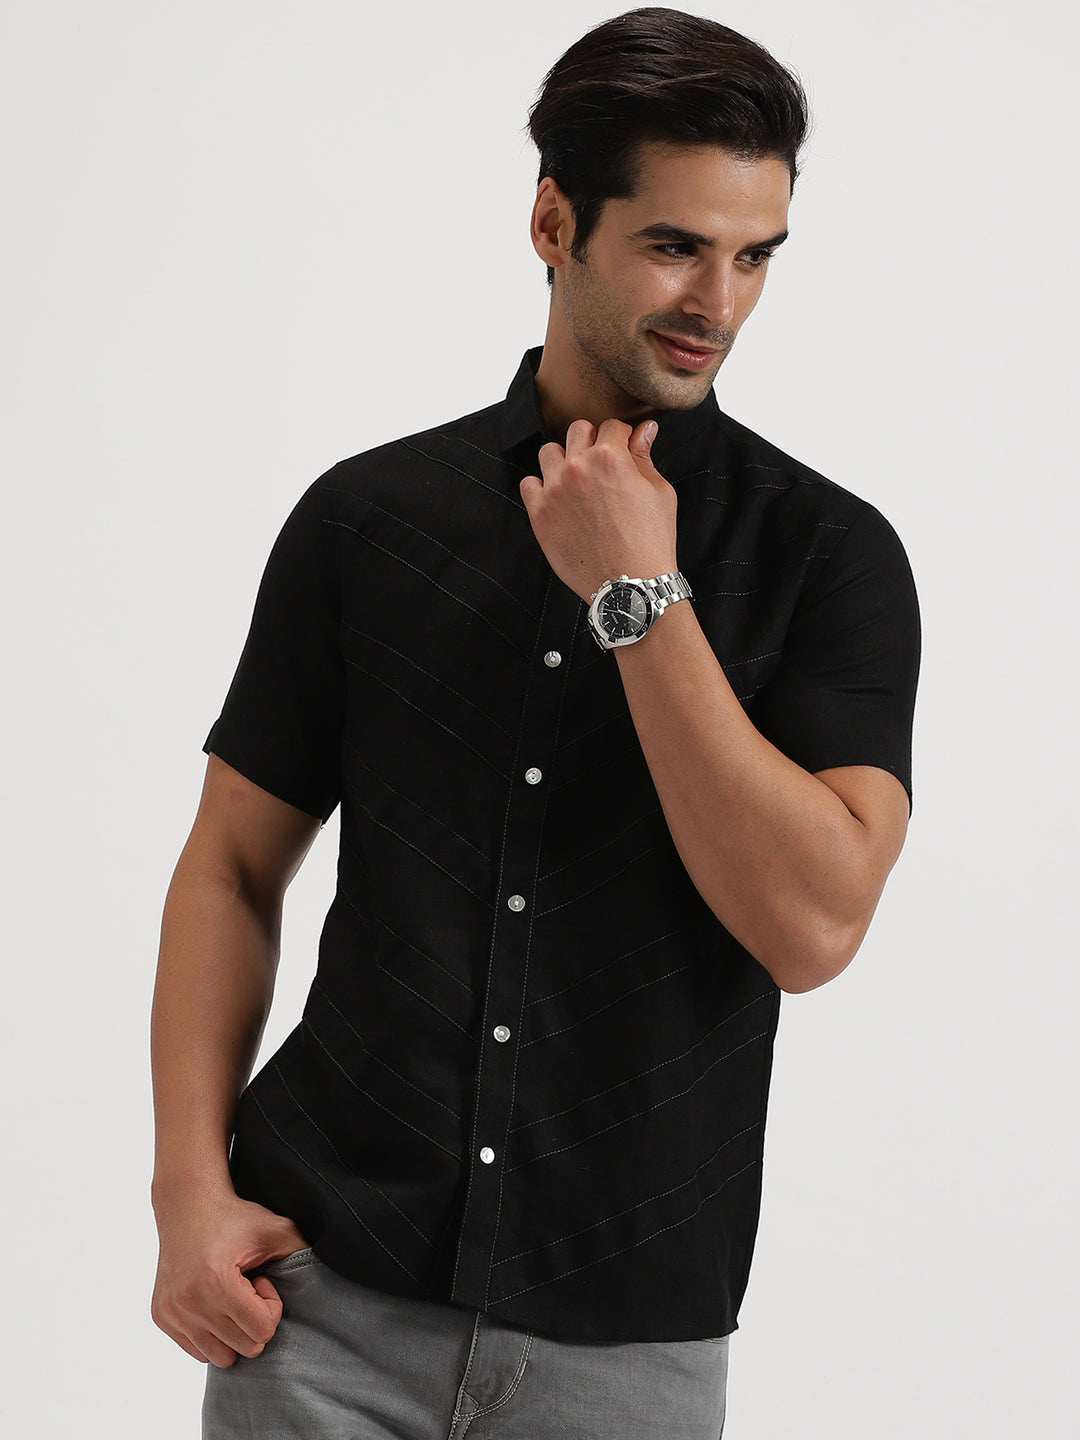 Pierre - Pure Linen Stitch Detailed Half Sleeve Shirt - Black